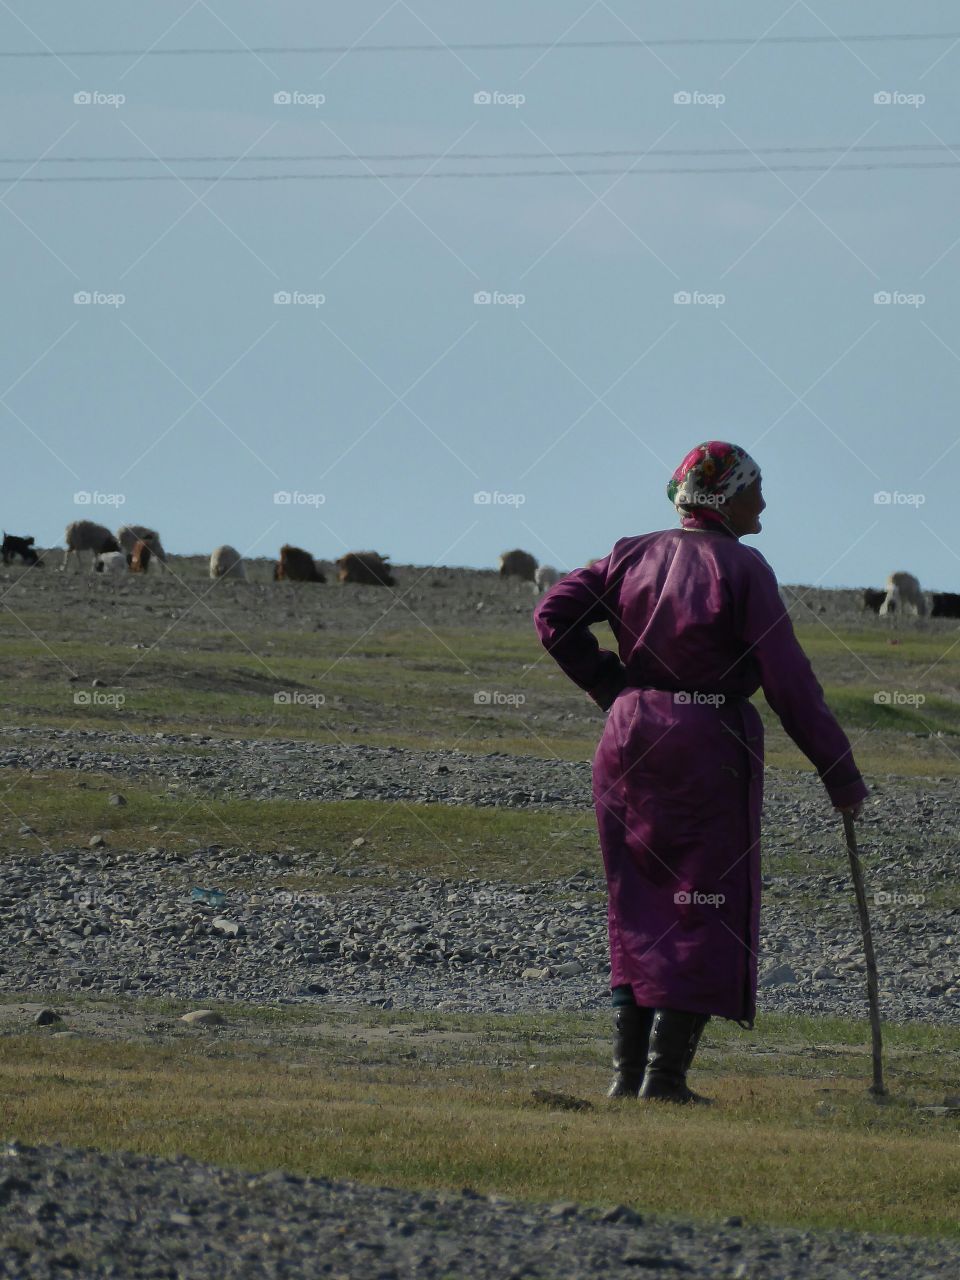 nomad elder watching over the animals